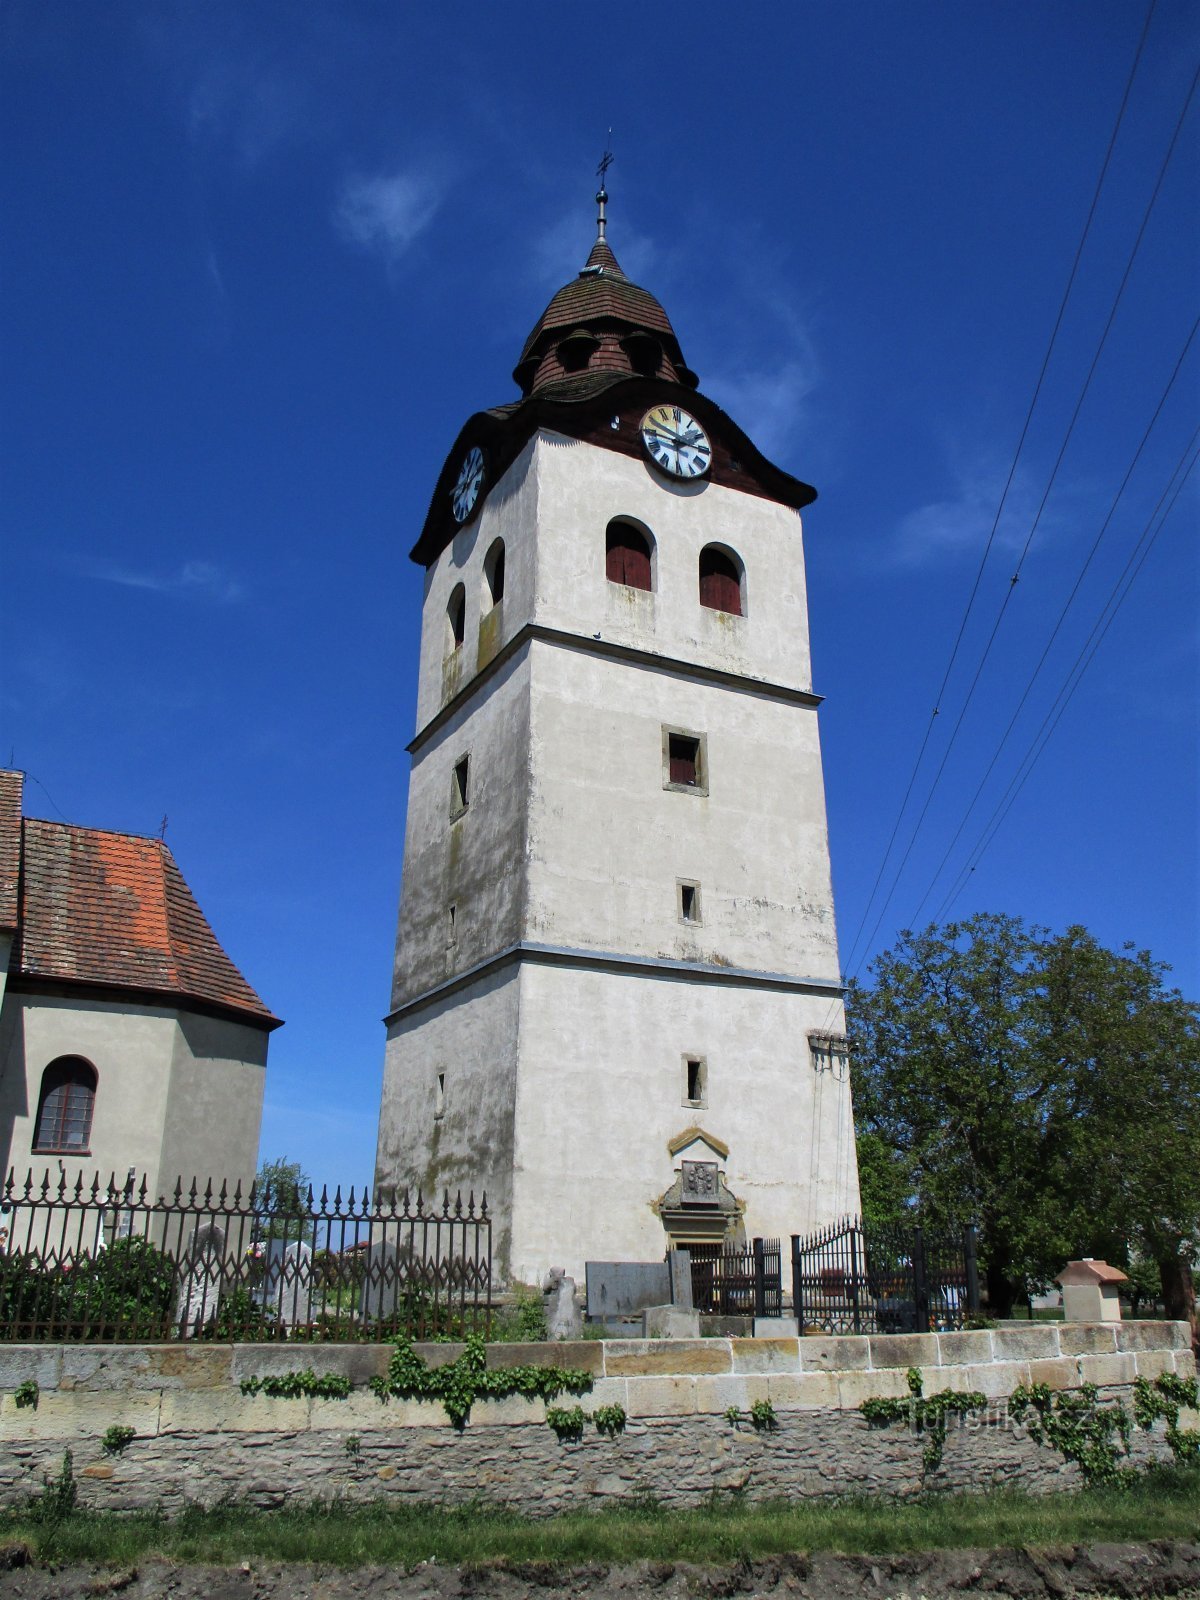 Bell tower at the church of St. Nicholas (Bohuslavice nad Metují, 18.5.2020/XNUMX/XNUMX)